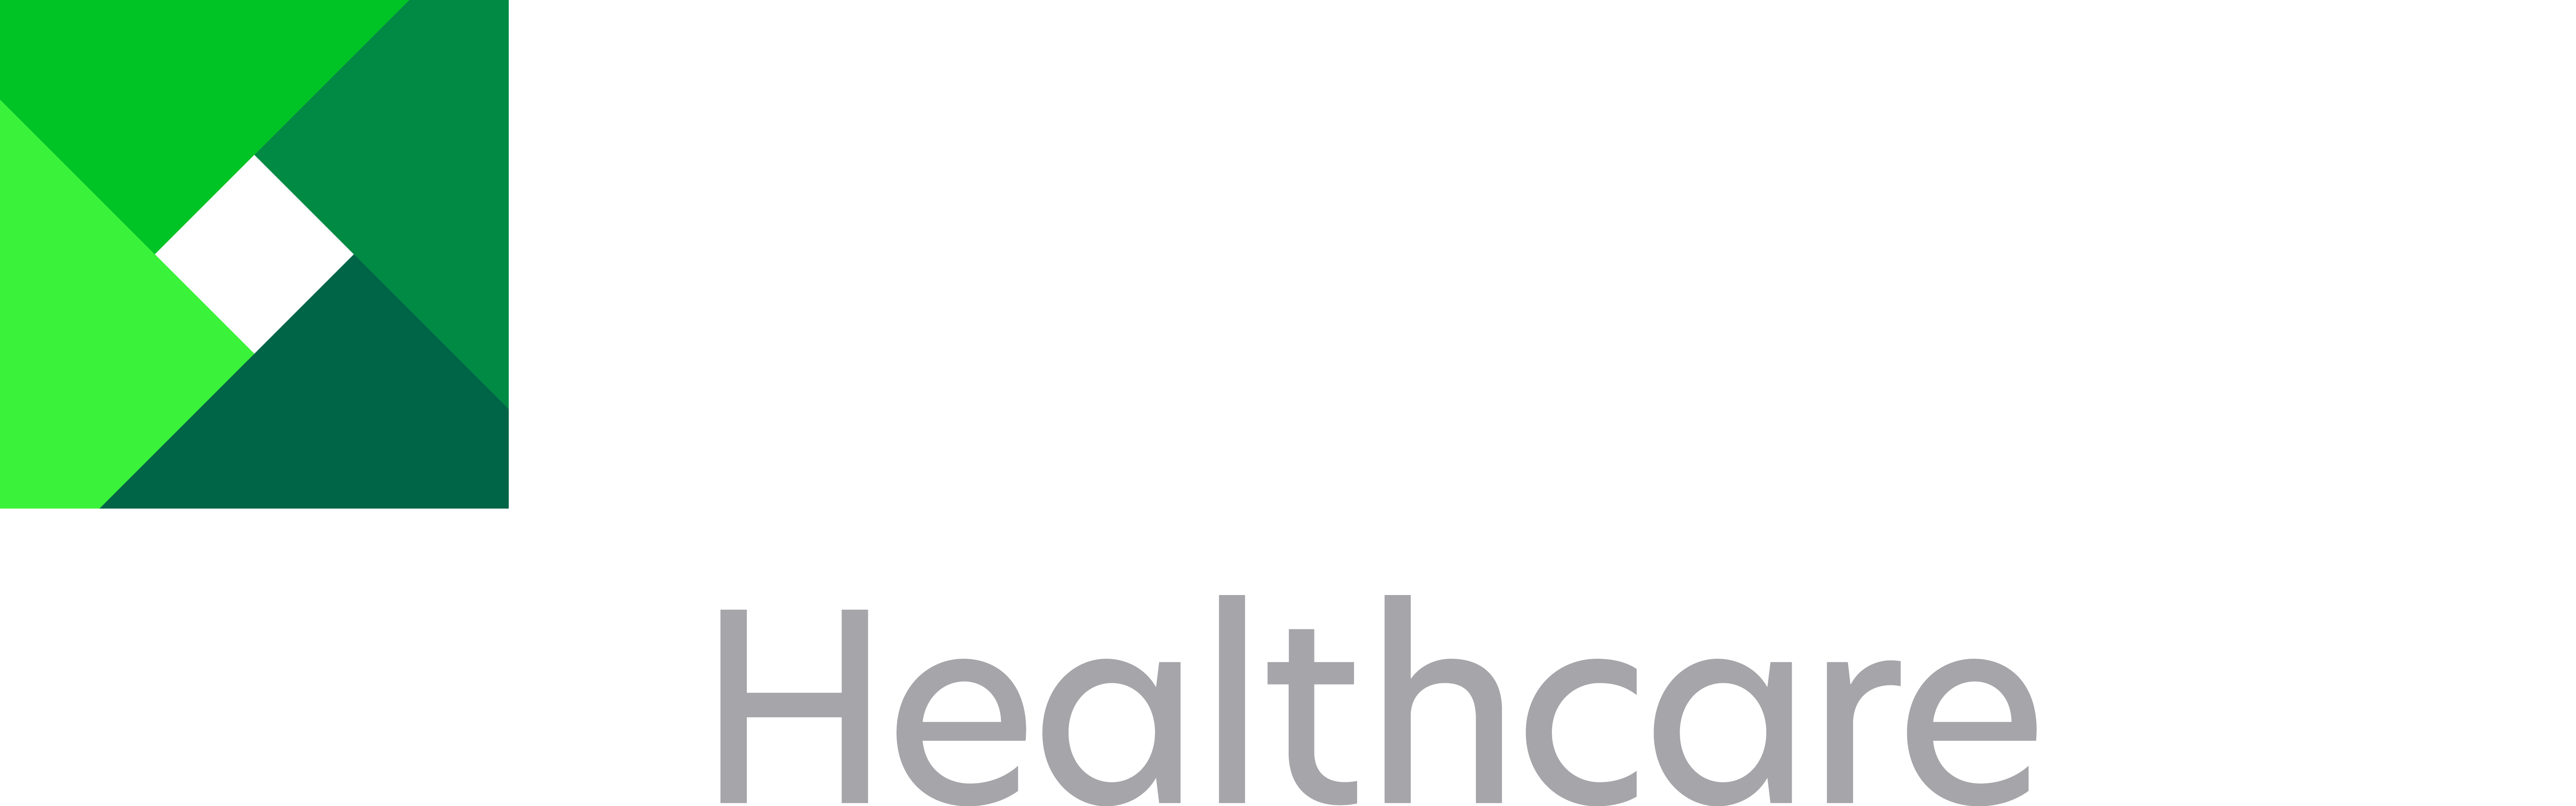 Lexmark Healthcare logo